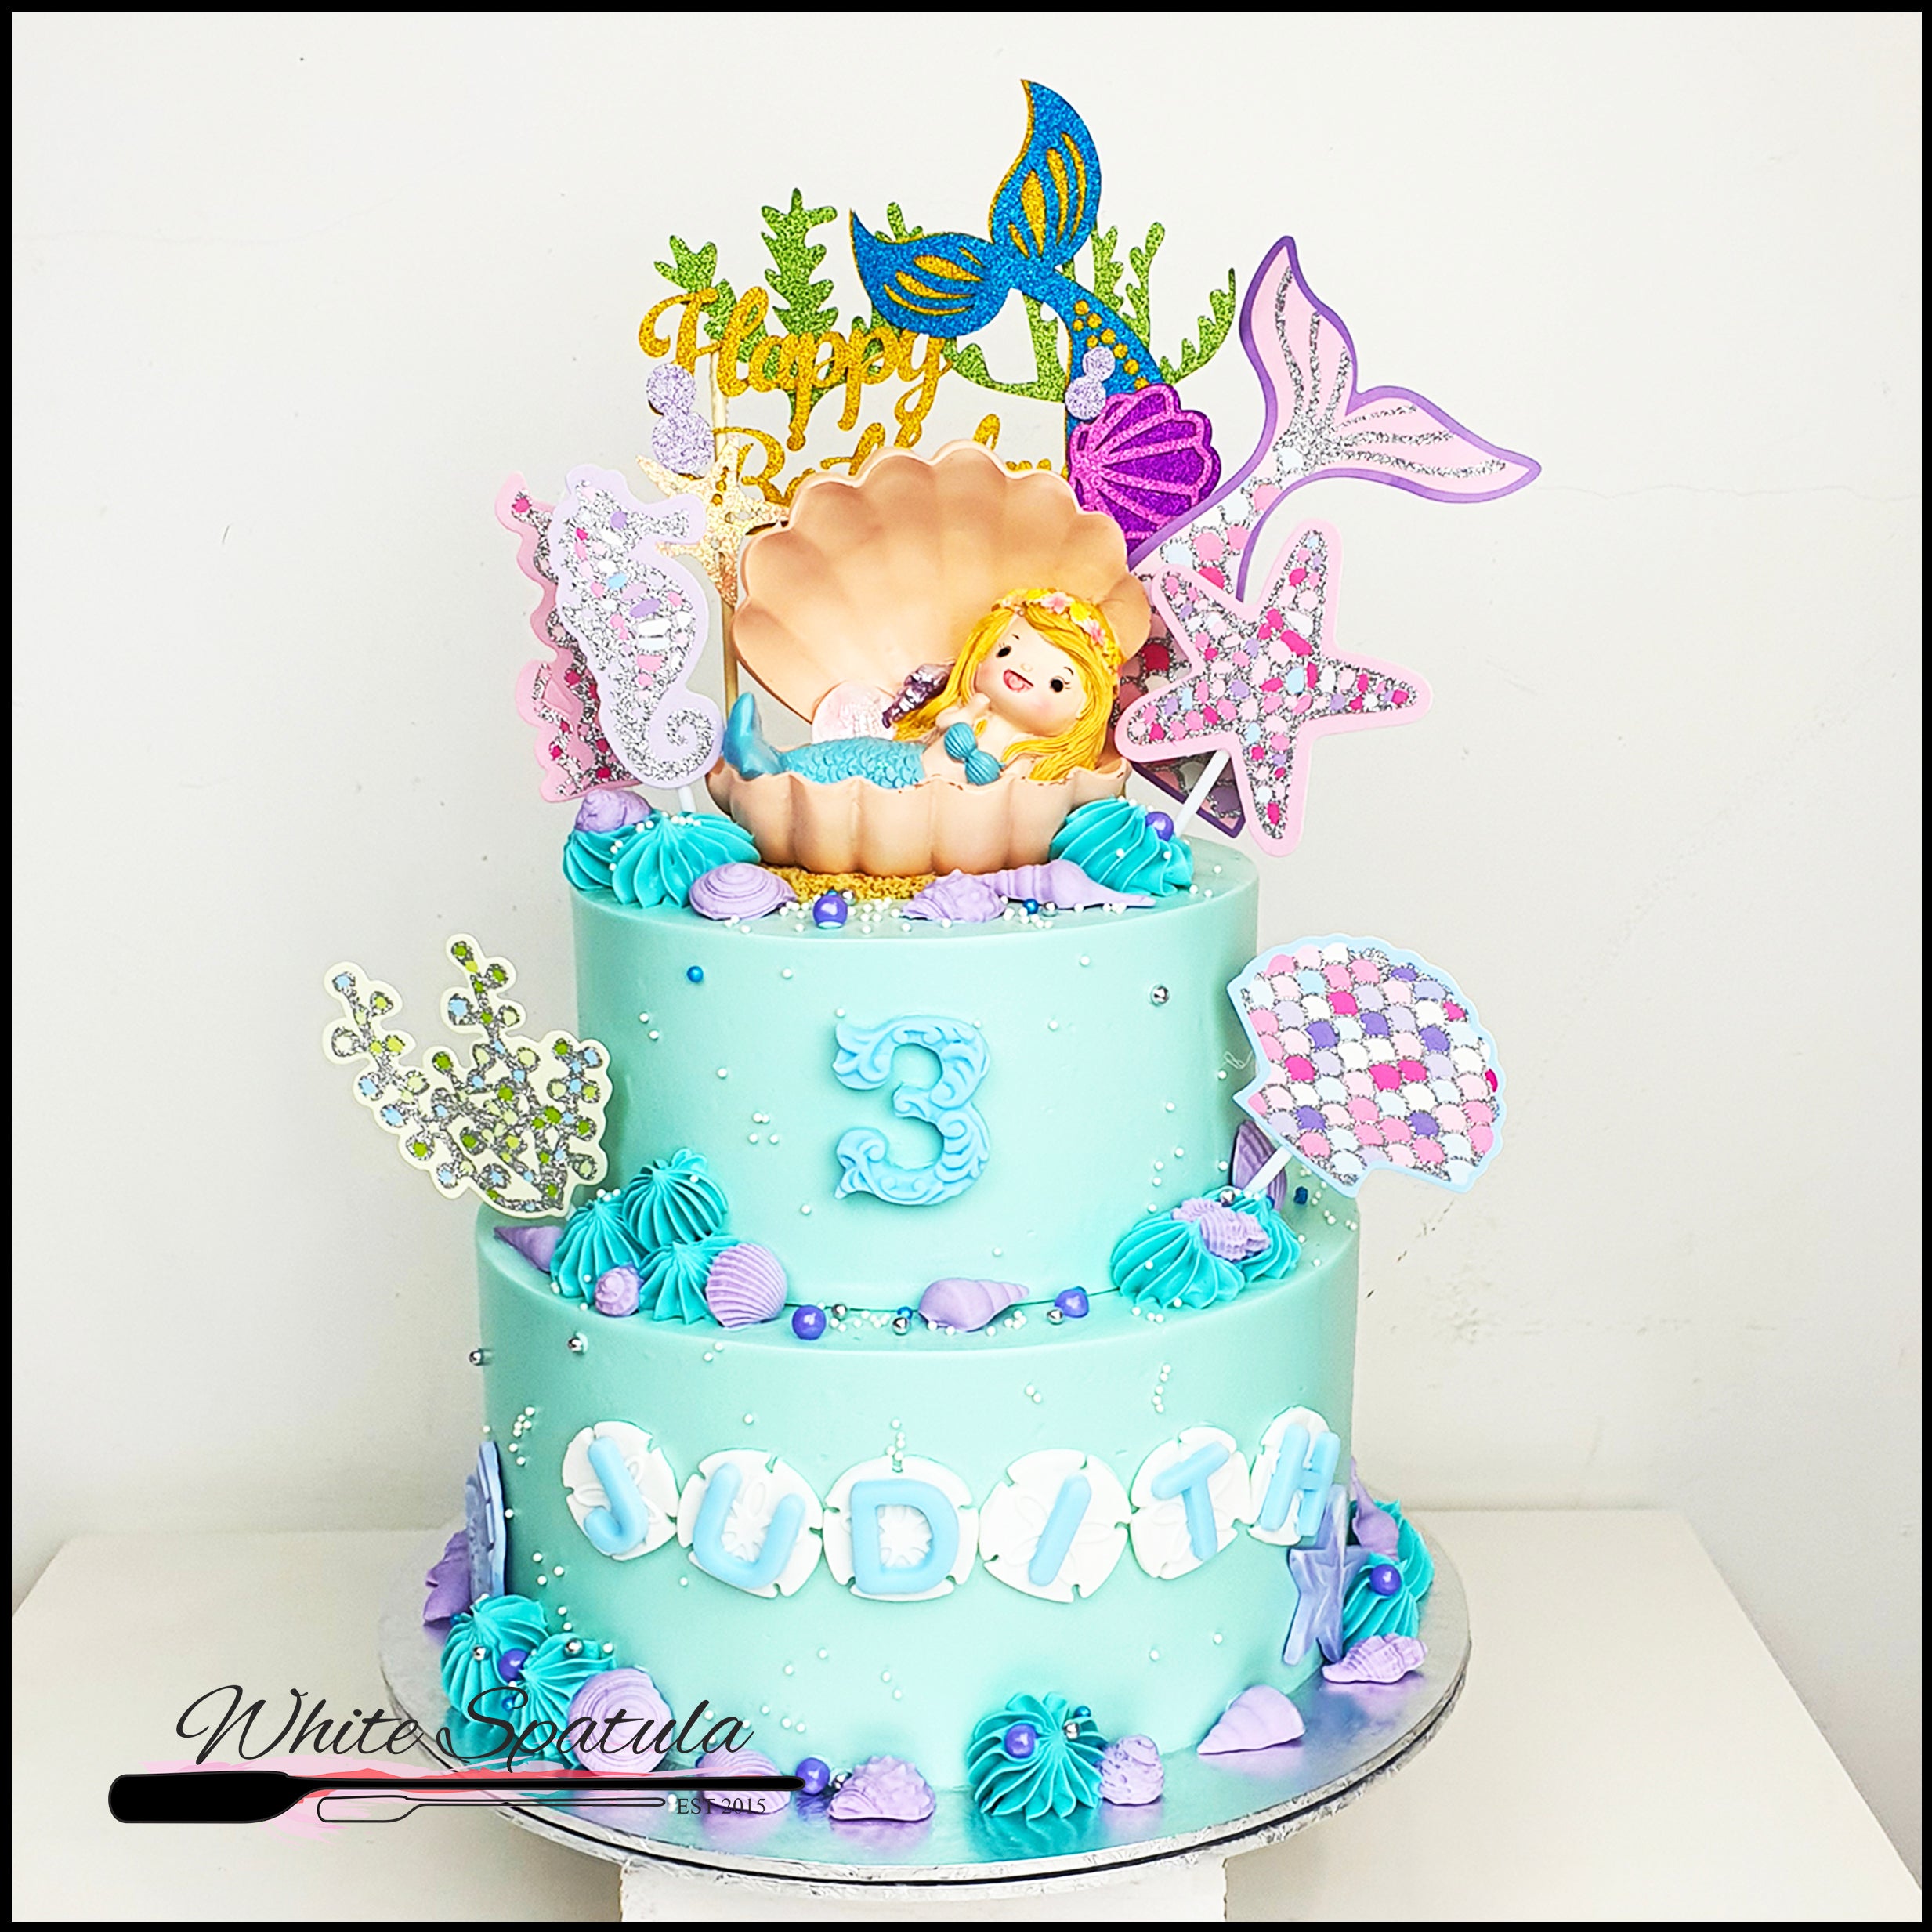 FAIRY DUST CAKE - PRINCESS ARIEL BIRTHDAY CAKE | Facebook